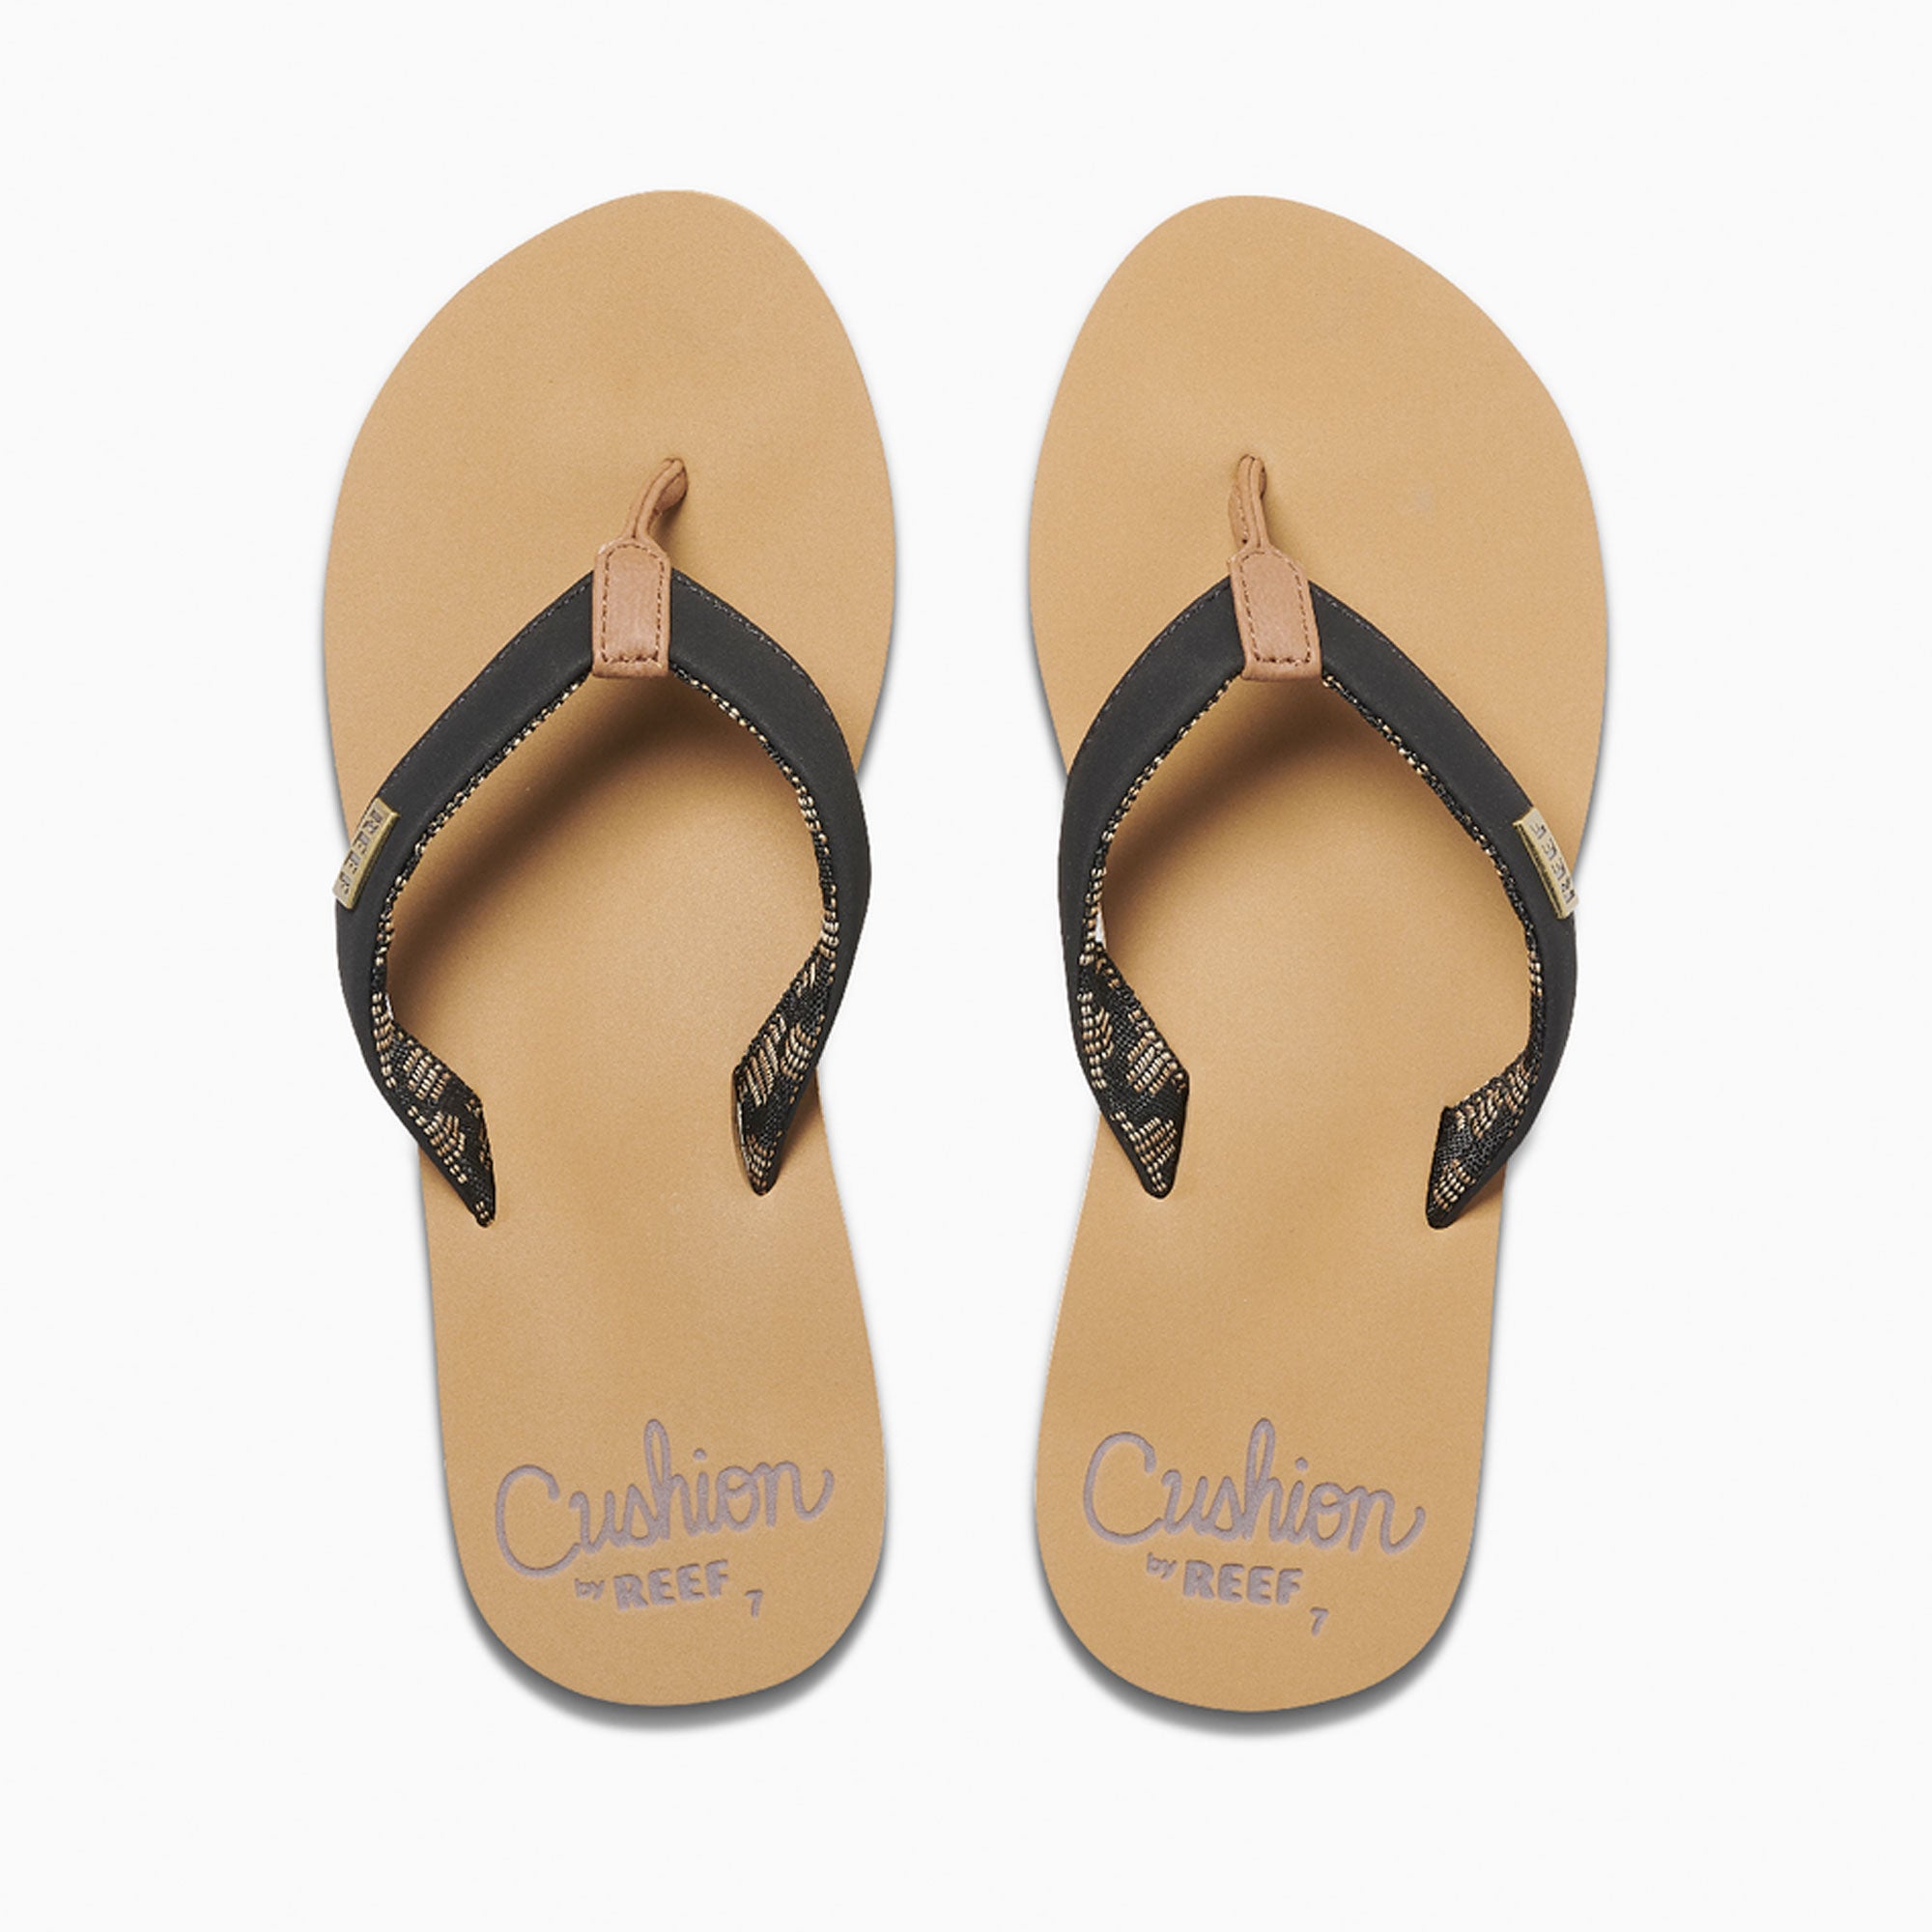 Reef Cushion Sands Women's Sandals